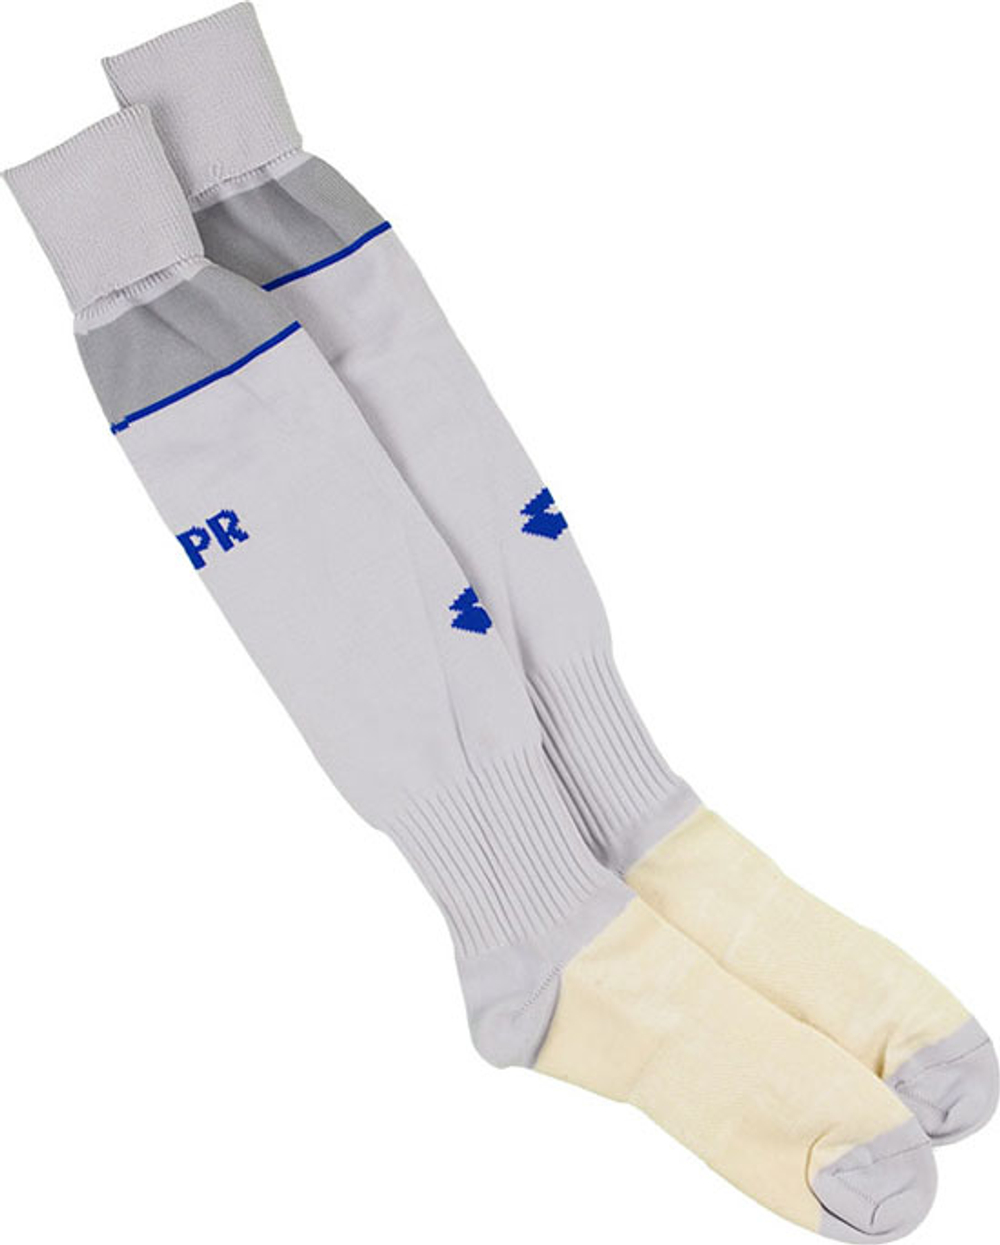 2013-14 QPR GK Grey Socks *BNIB* S-QPR Goalkeeper Shorts & Socks Shorts & Socks Permanent Price Drops